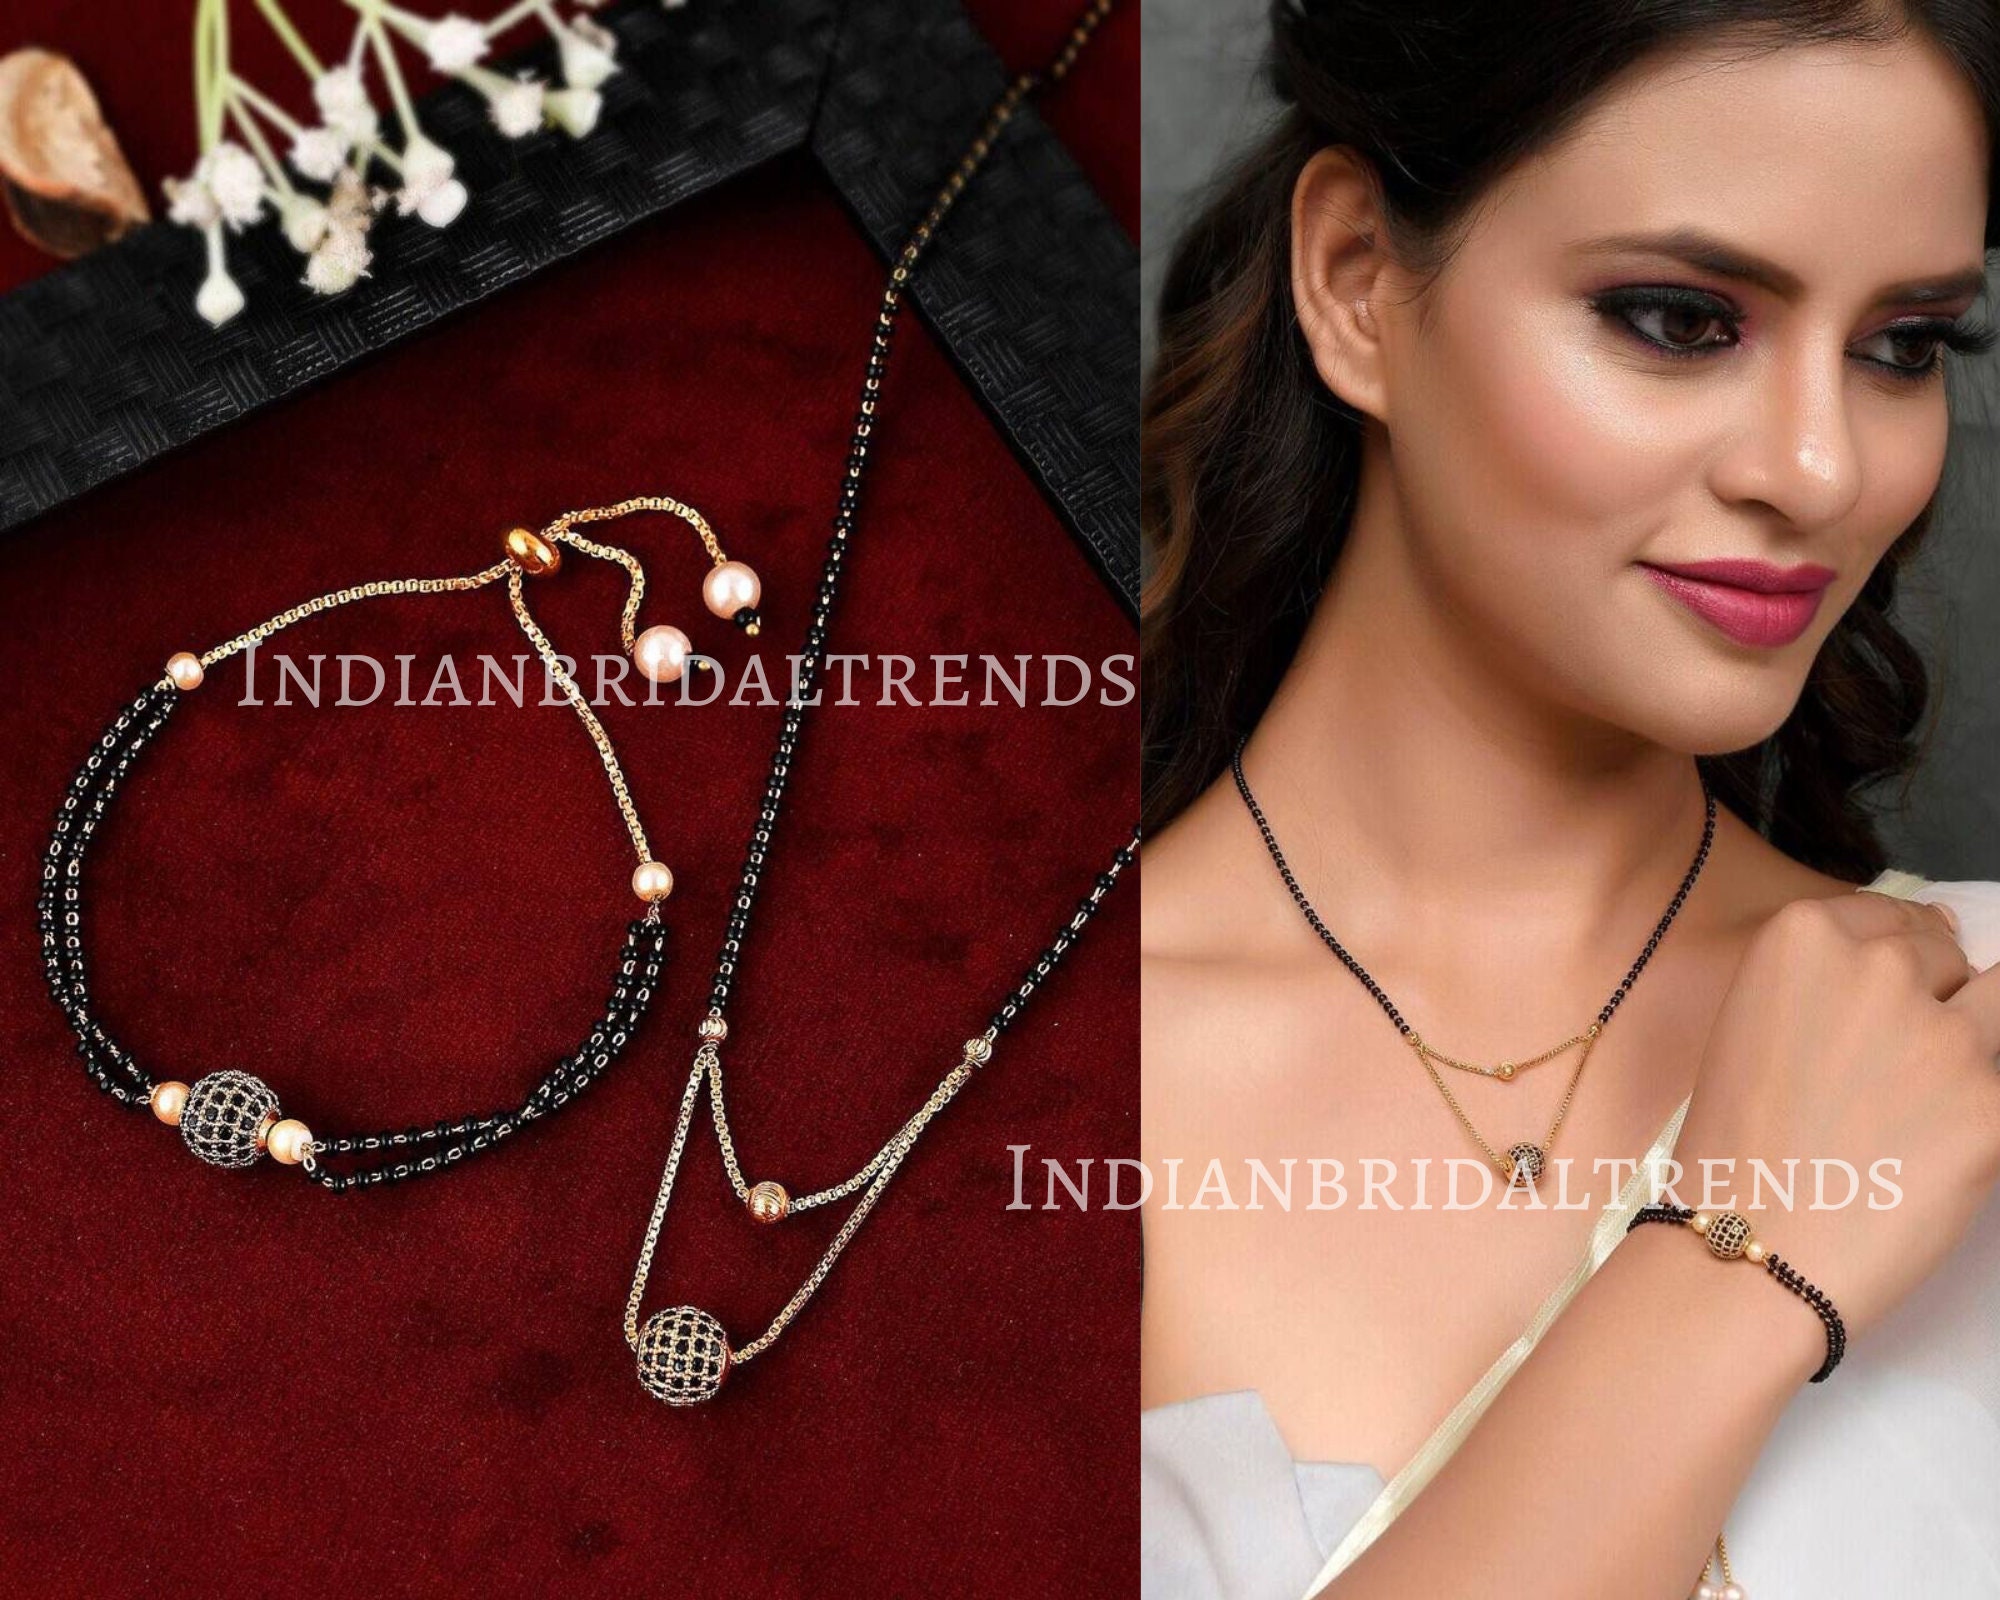 Mangalsutra Bracelet/Antique Gold Classic Bracelet/ Indian Jewelry/ Gold Bracelet/Black Bead Bracelet/ Indian Wedding Jewelry/ Nazarbattu